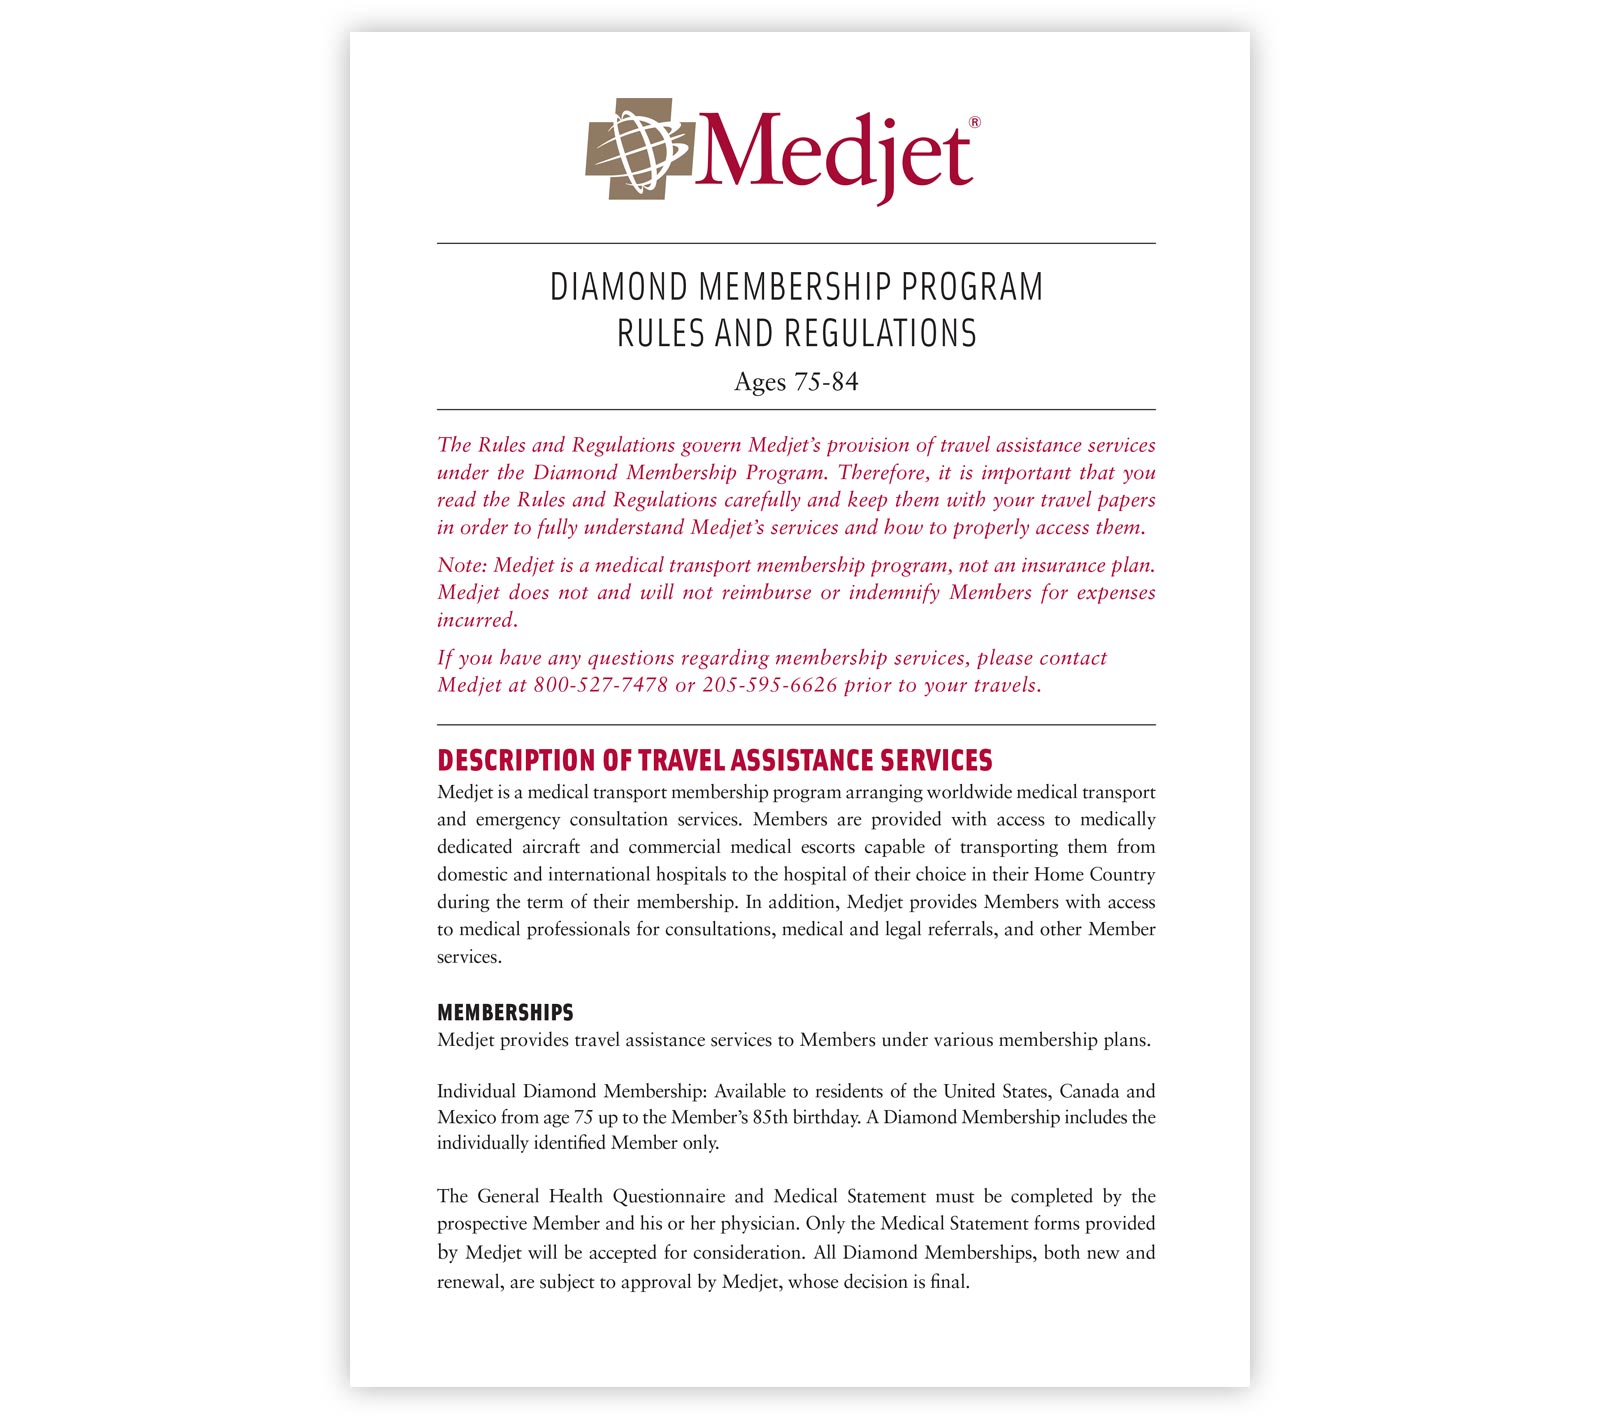 Medjet Diamond Membership Rules and Regulations